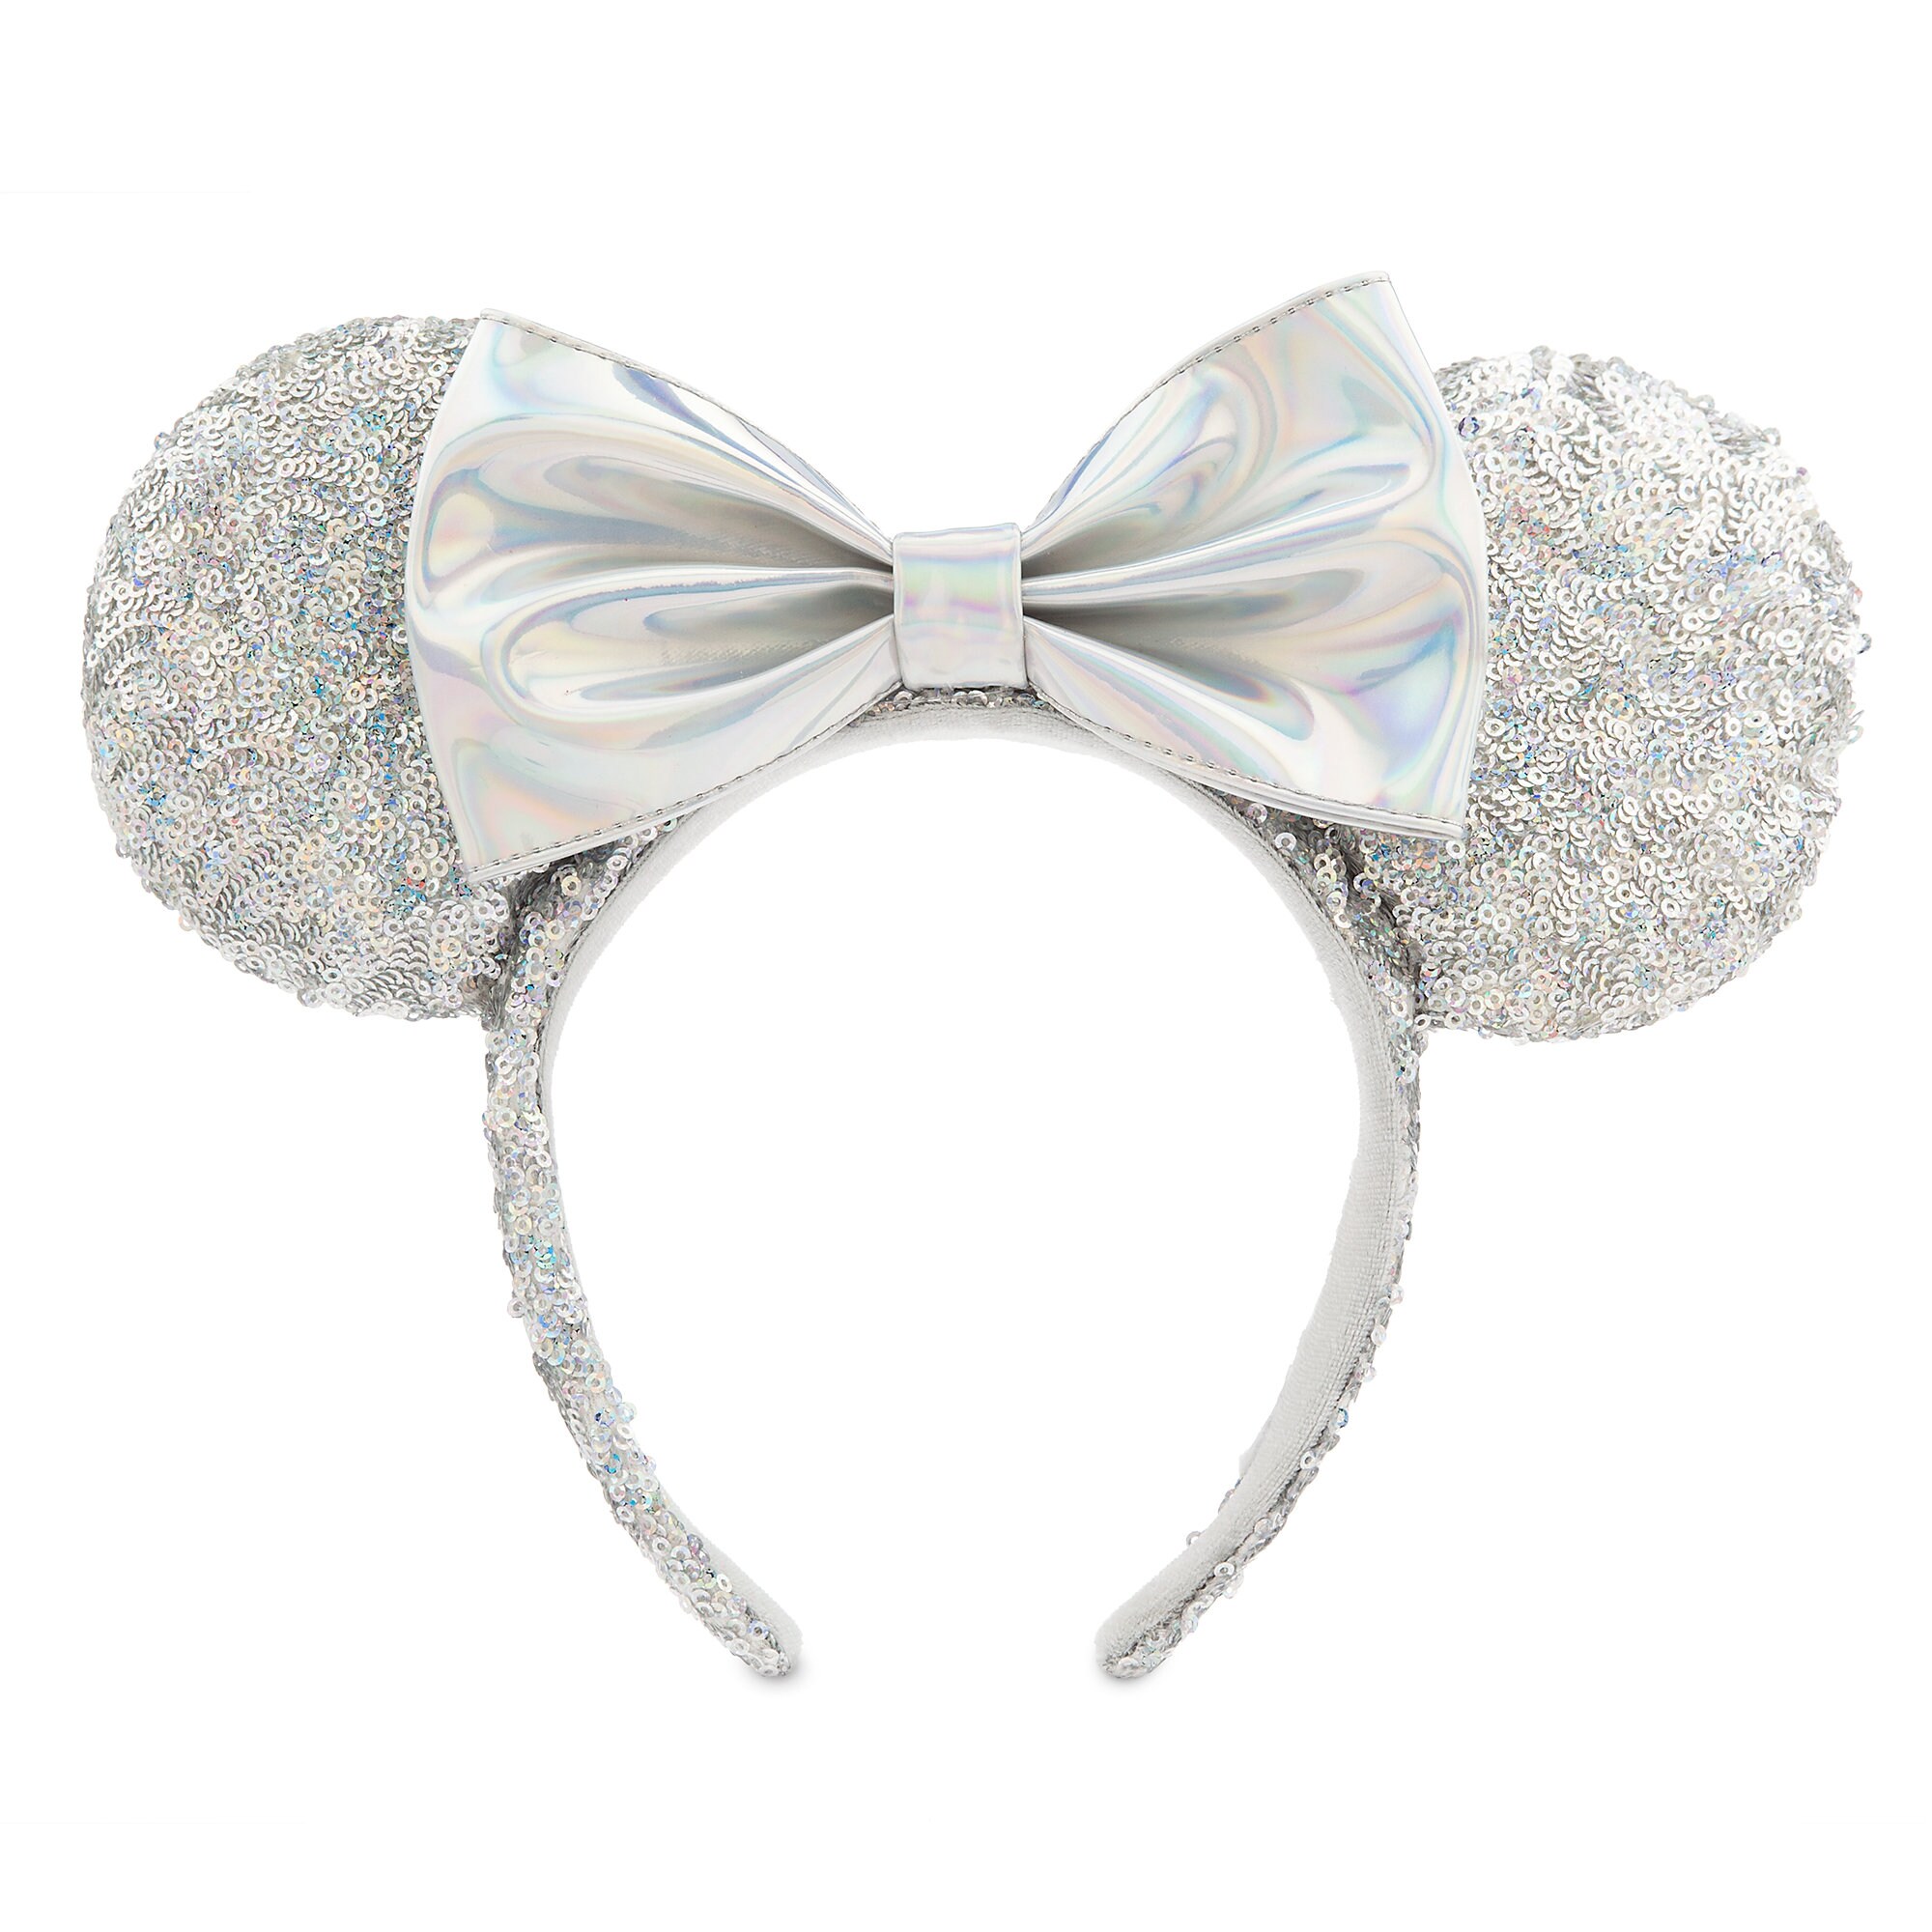 Minnie Mouse Sequined Ear Headband - Magic Mirror Metallic